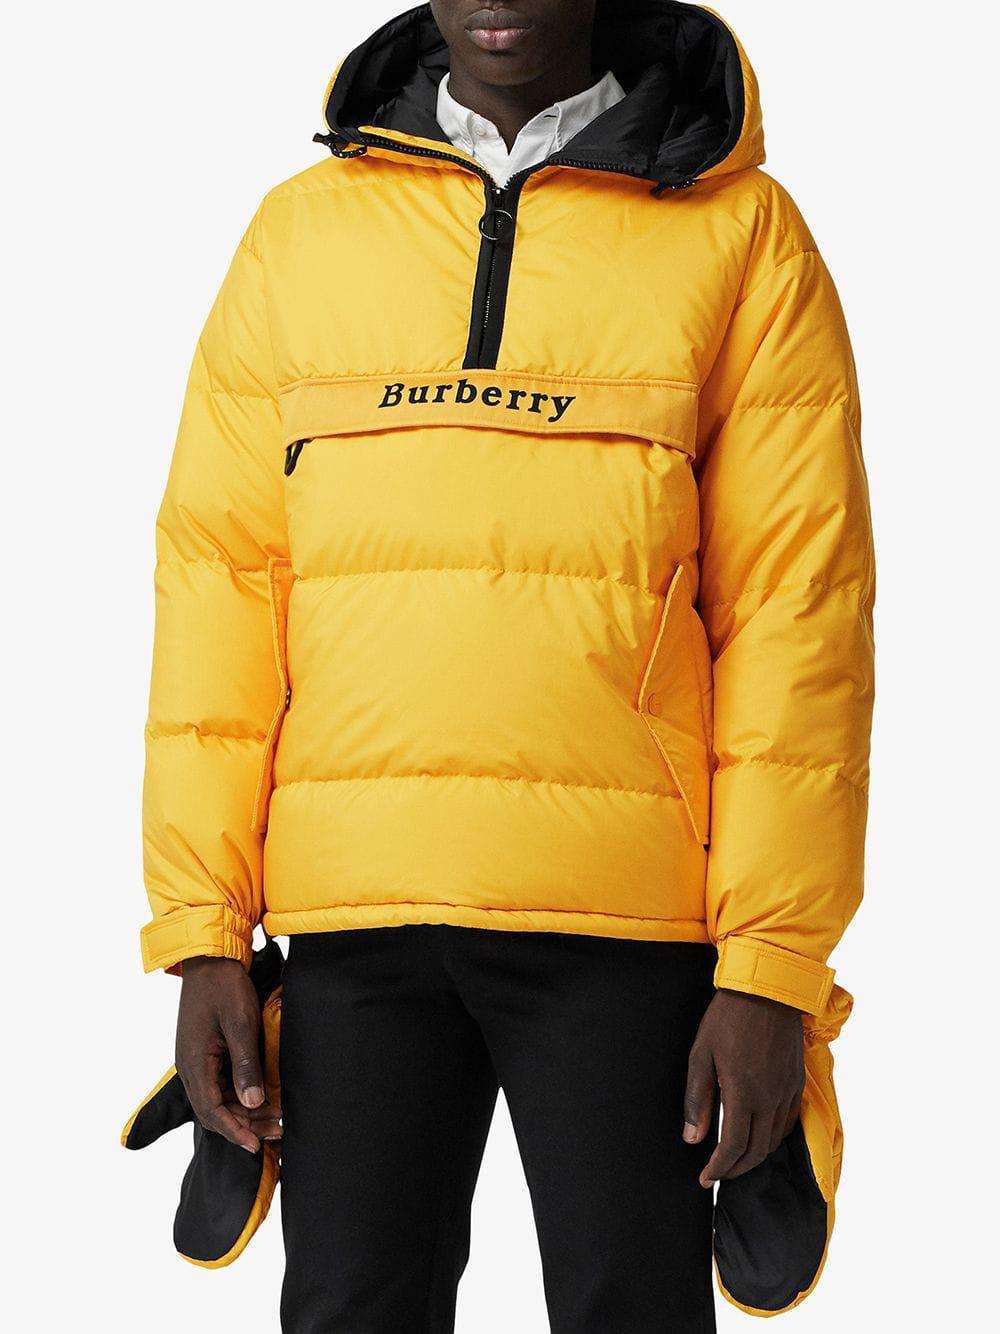 yellow burberry jacket Off 73% - www.loverethymno.com